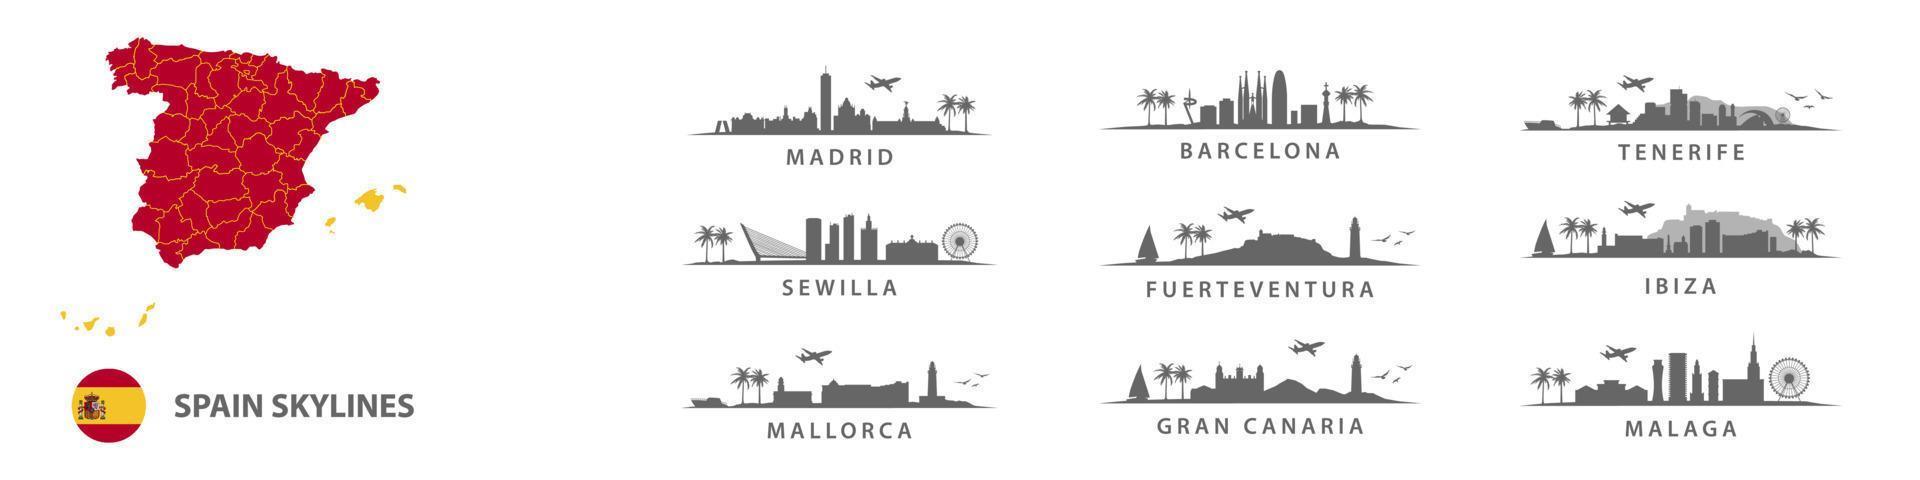 Collection of spanish skylines, big cities in Spain, Madrid, Barcelona, Seville, Malaga, Ibiza, Tenerife, Las Palmas, Gran Canaria vector